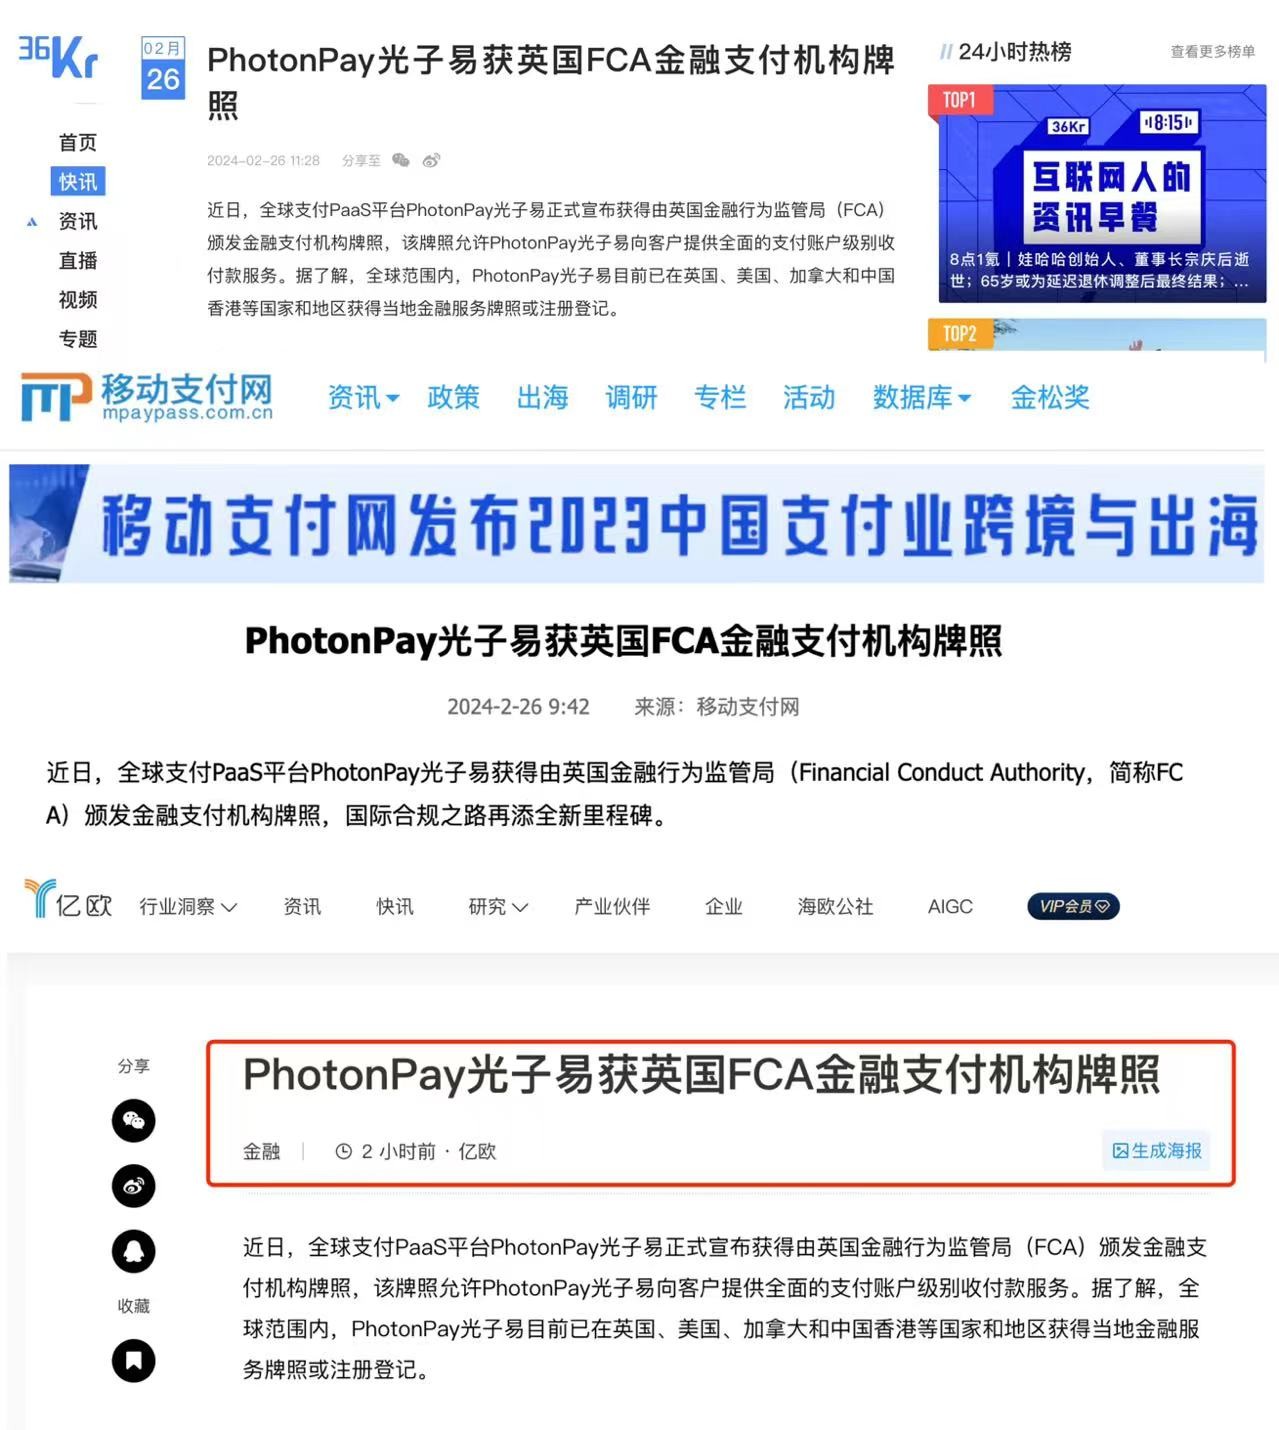 PhotonPay光子易获英国FCA金融支付机构牌照，多家权威媒体关注报道